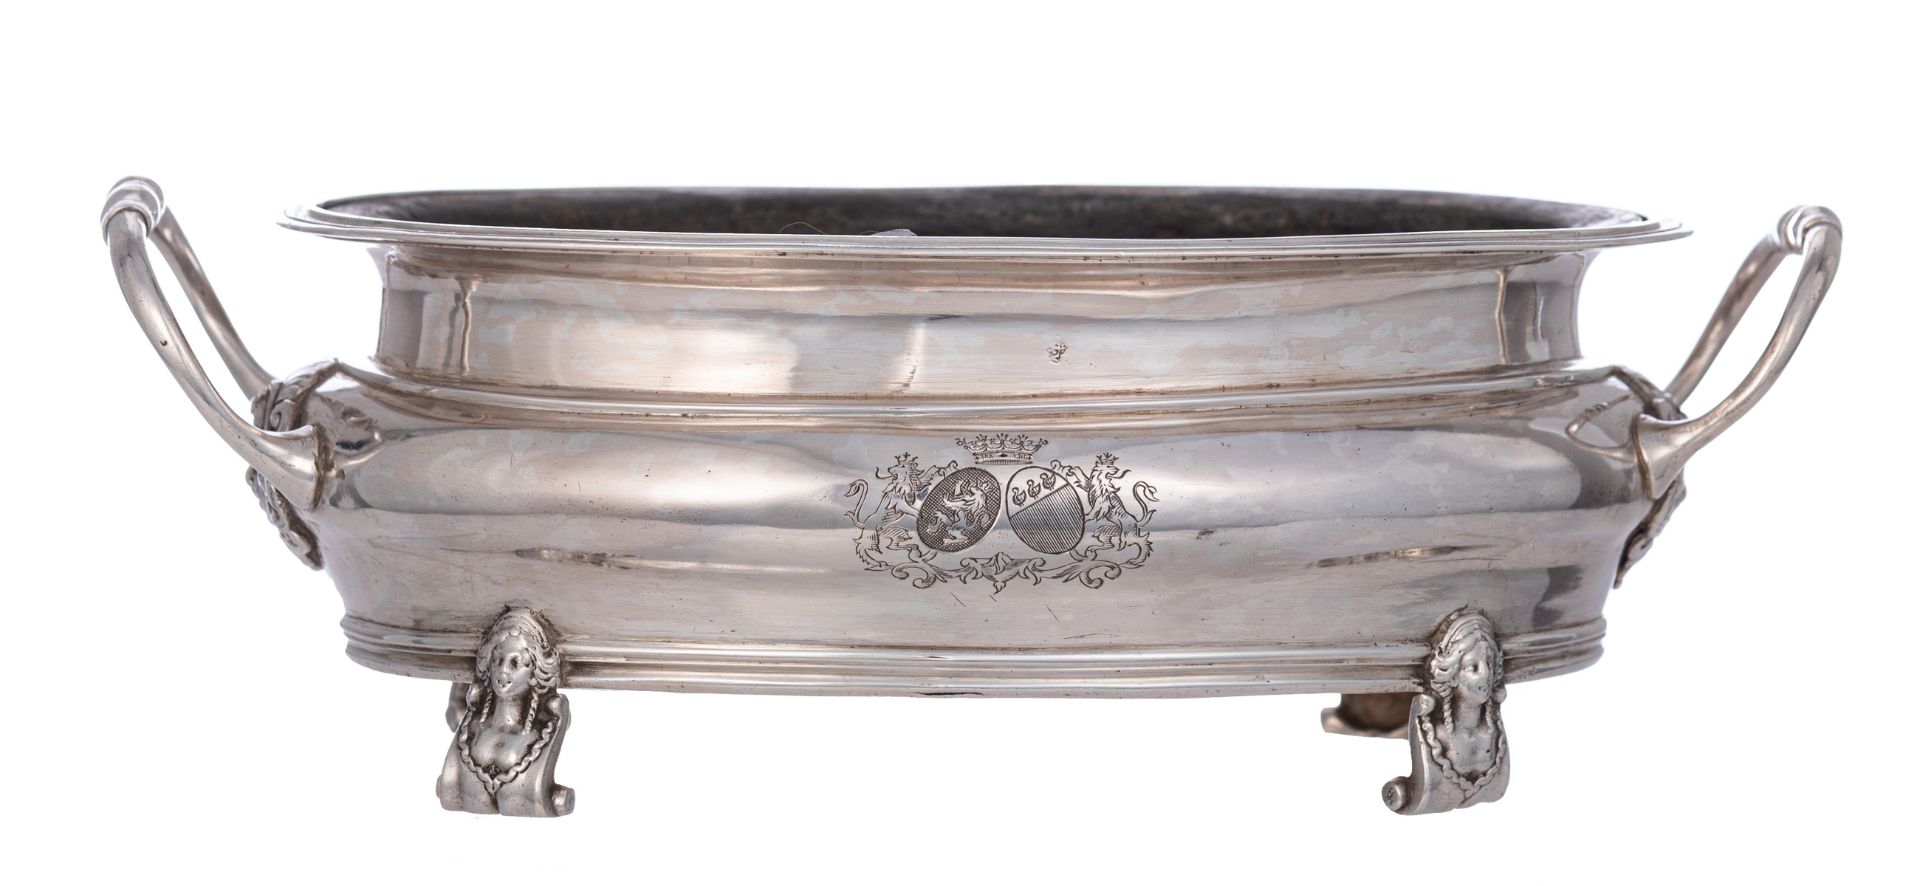 A mid-18thC French régence style silver basket (jardinière?), indefinite hallmarks (Paris?), French